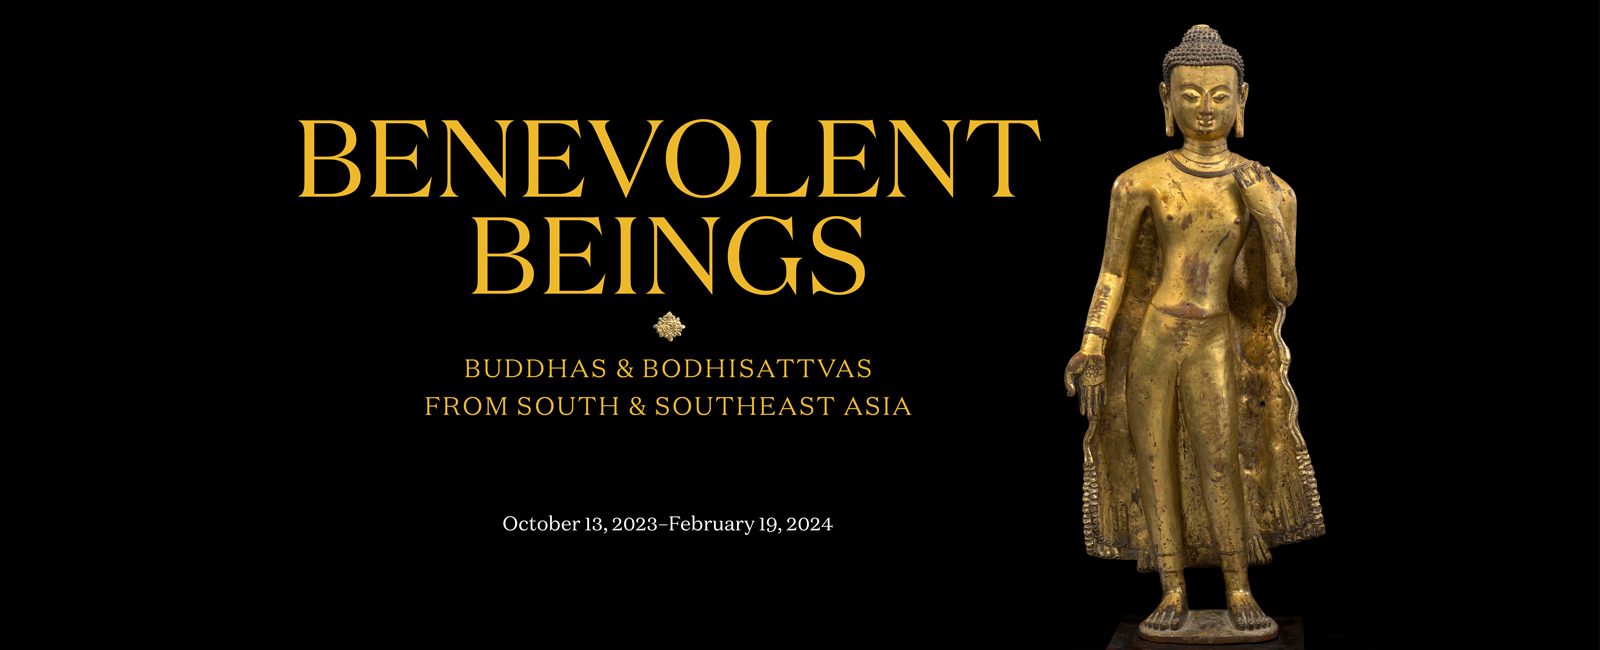 Benevolent Beings exhibition promotion banner